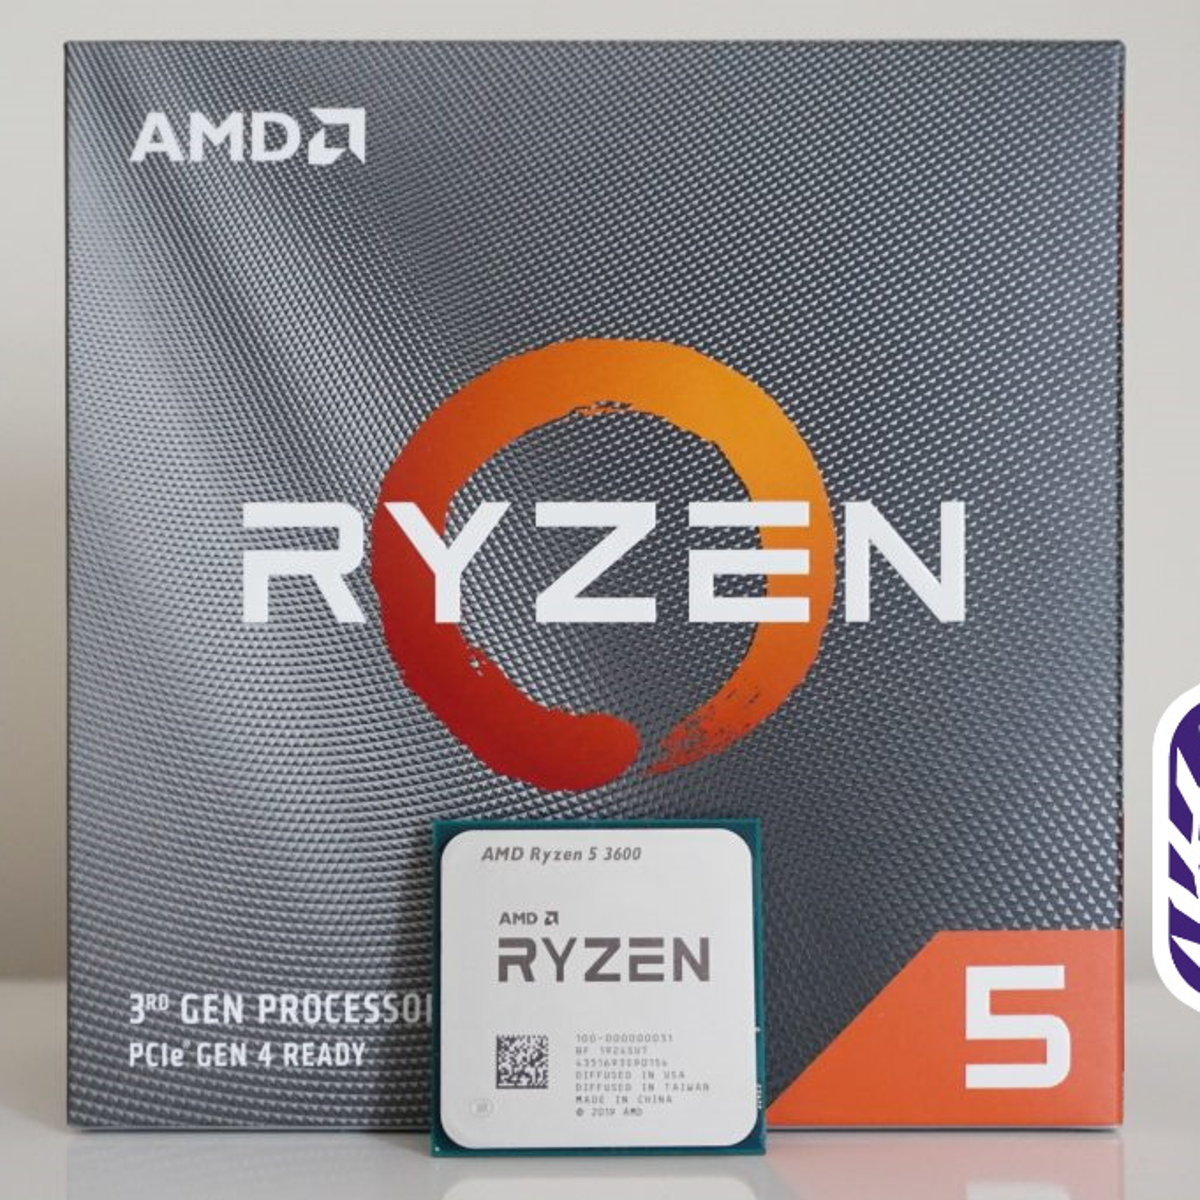 Primitief kamp dood AMD Ryzen 5 3600 review: A great value gaming CPU | Rock Paper Shotgun